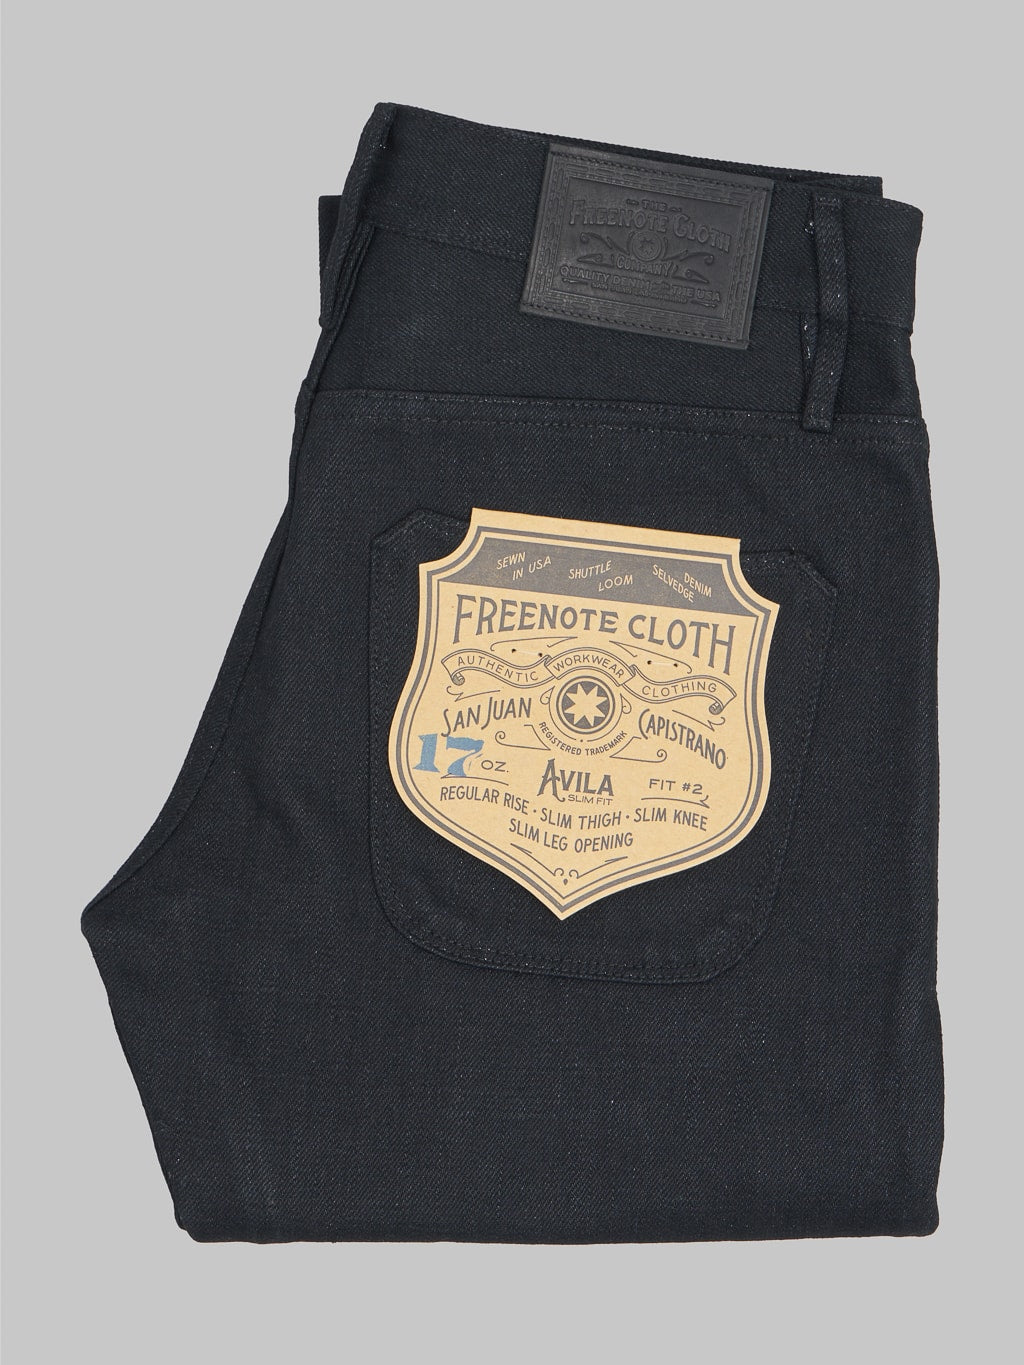 Freenote Cloth Avila 17oz Black Denim Slim Taper Jeans fabric